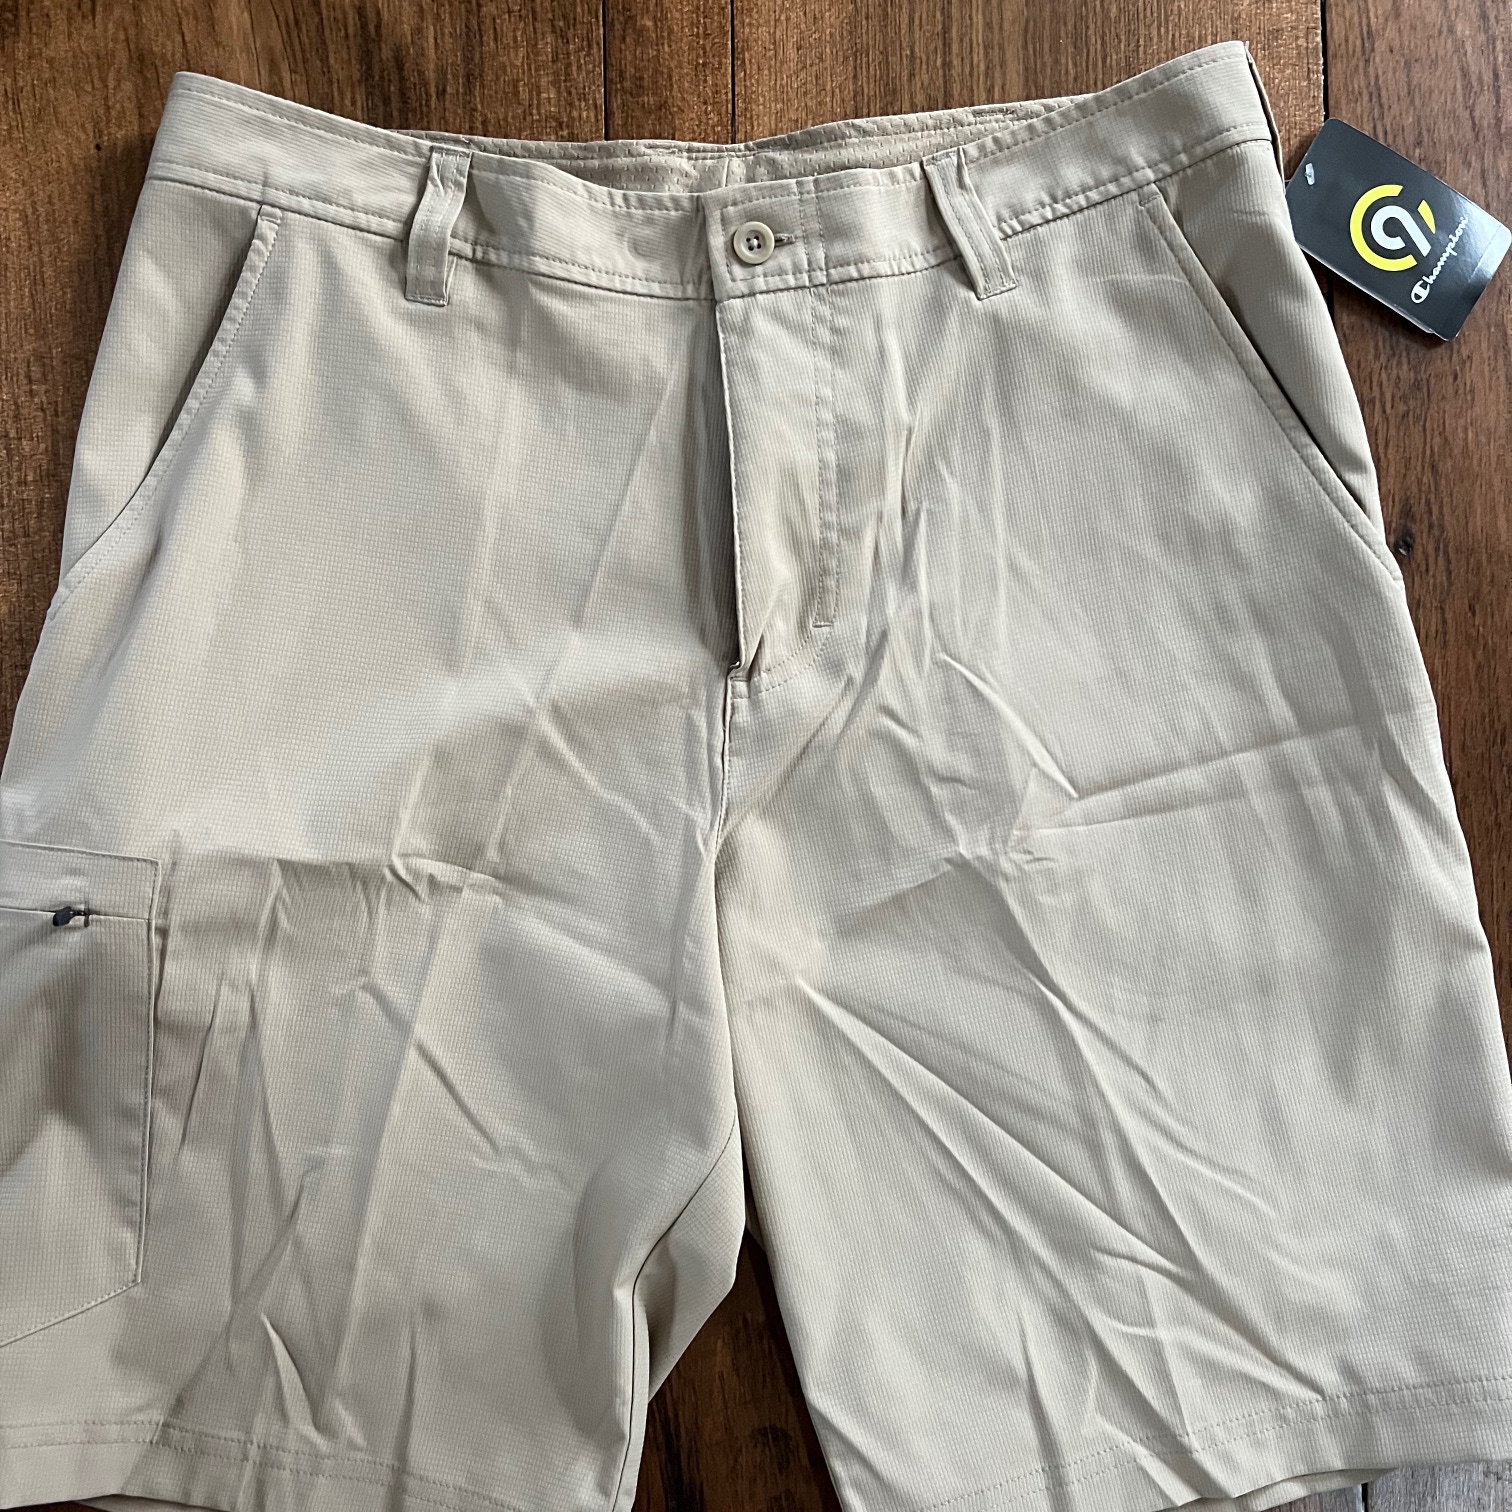 Men’s Golf Champion Lightweight Shorts with side pocket 32 Waist New